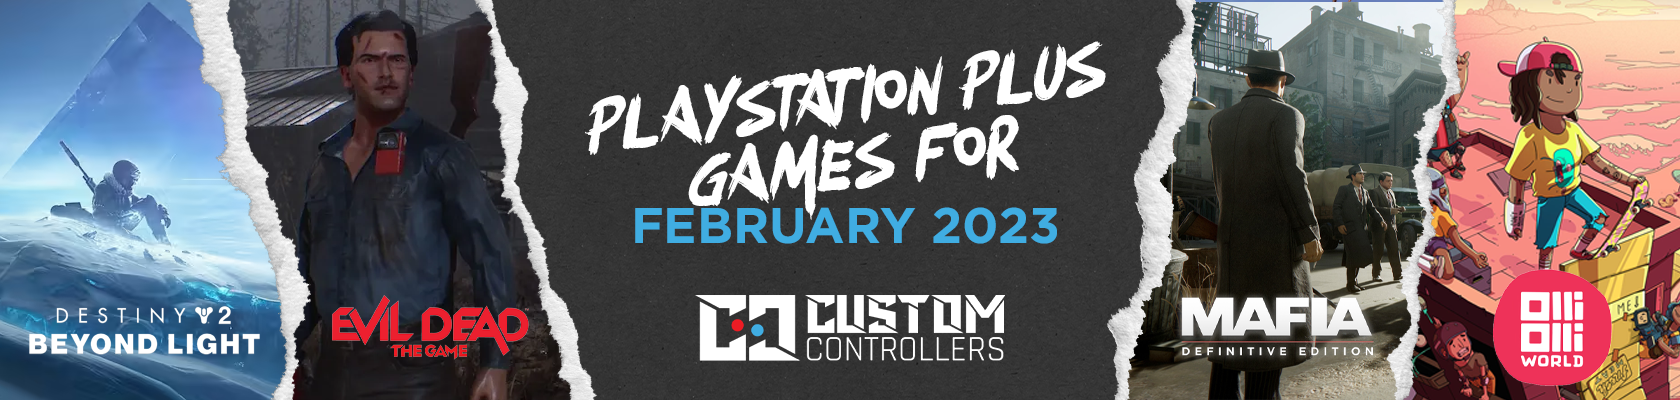 PS Plus Games February 2023-Custom Controllers UK